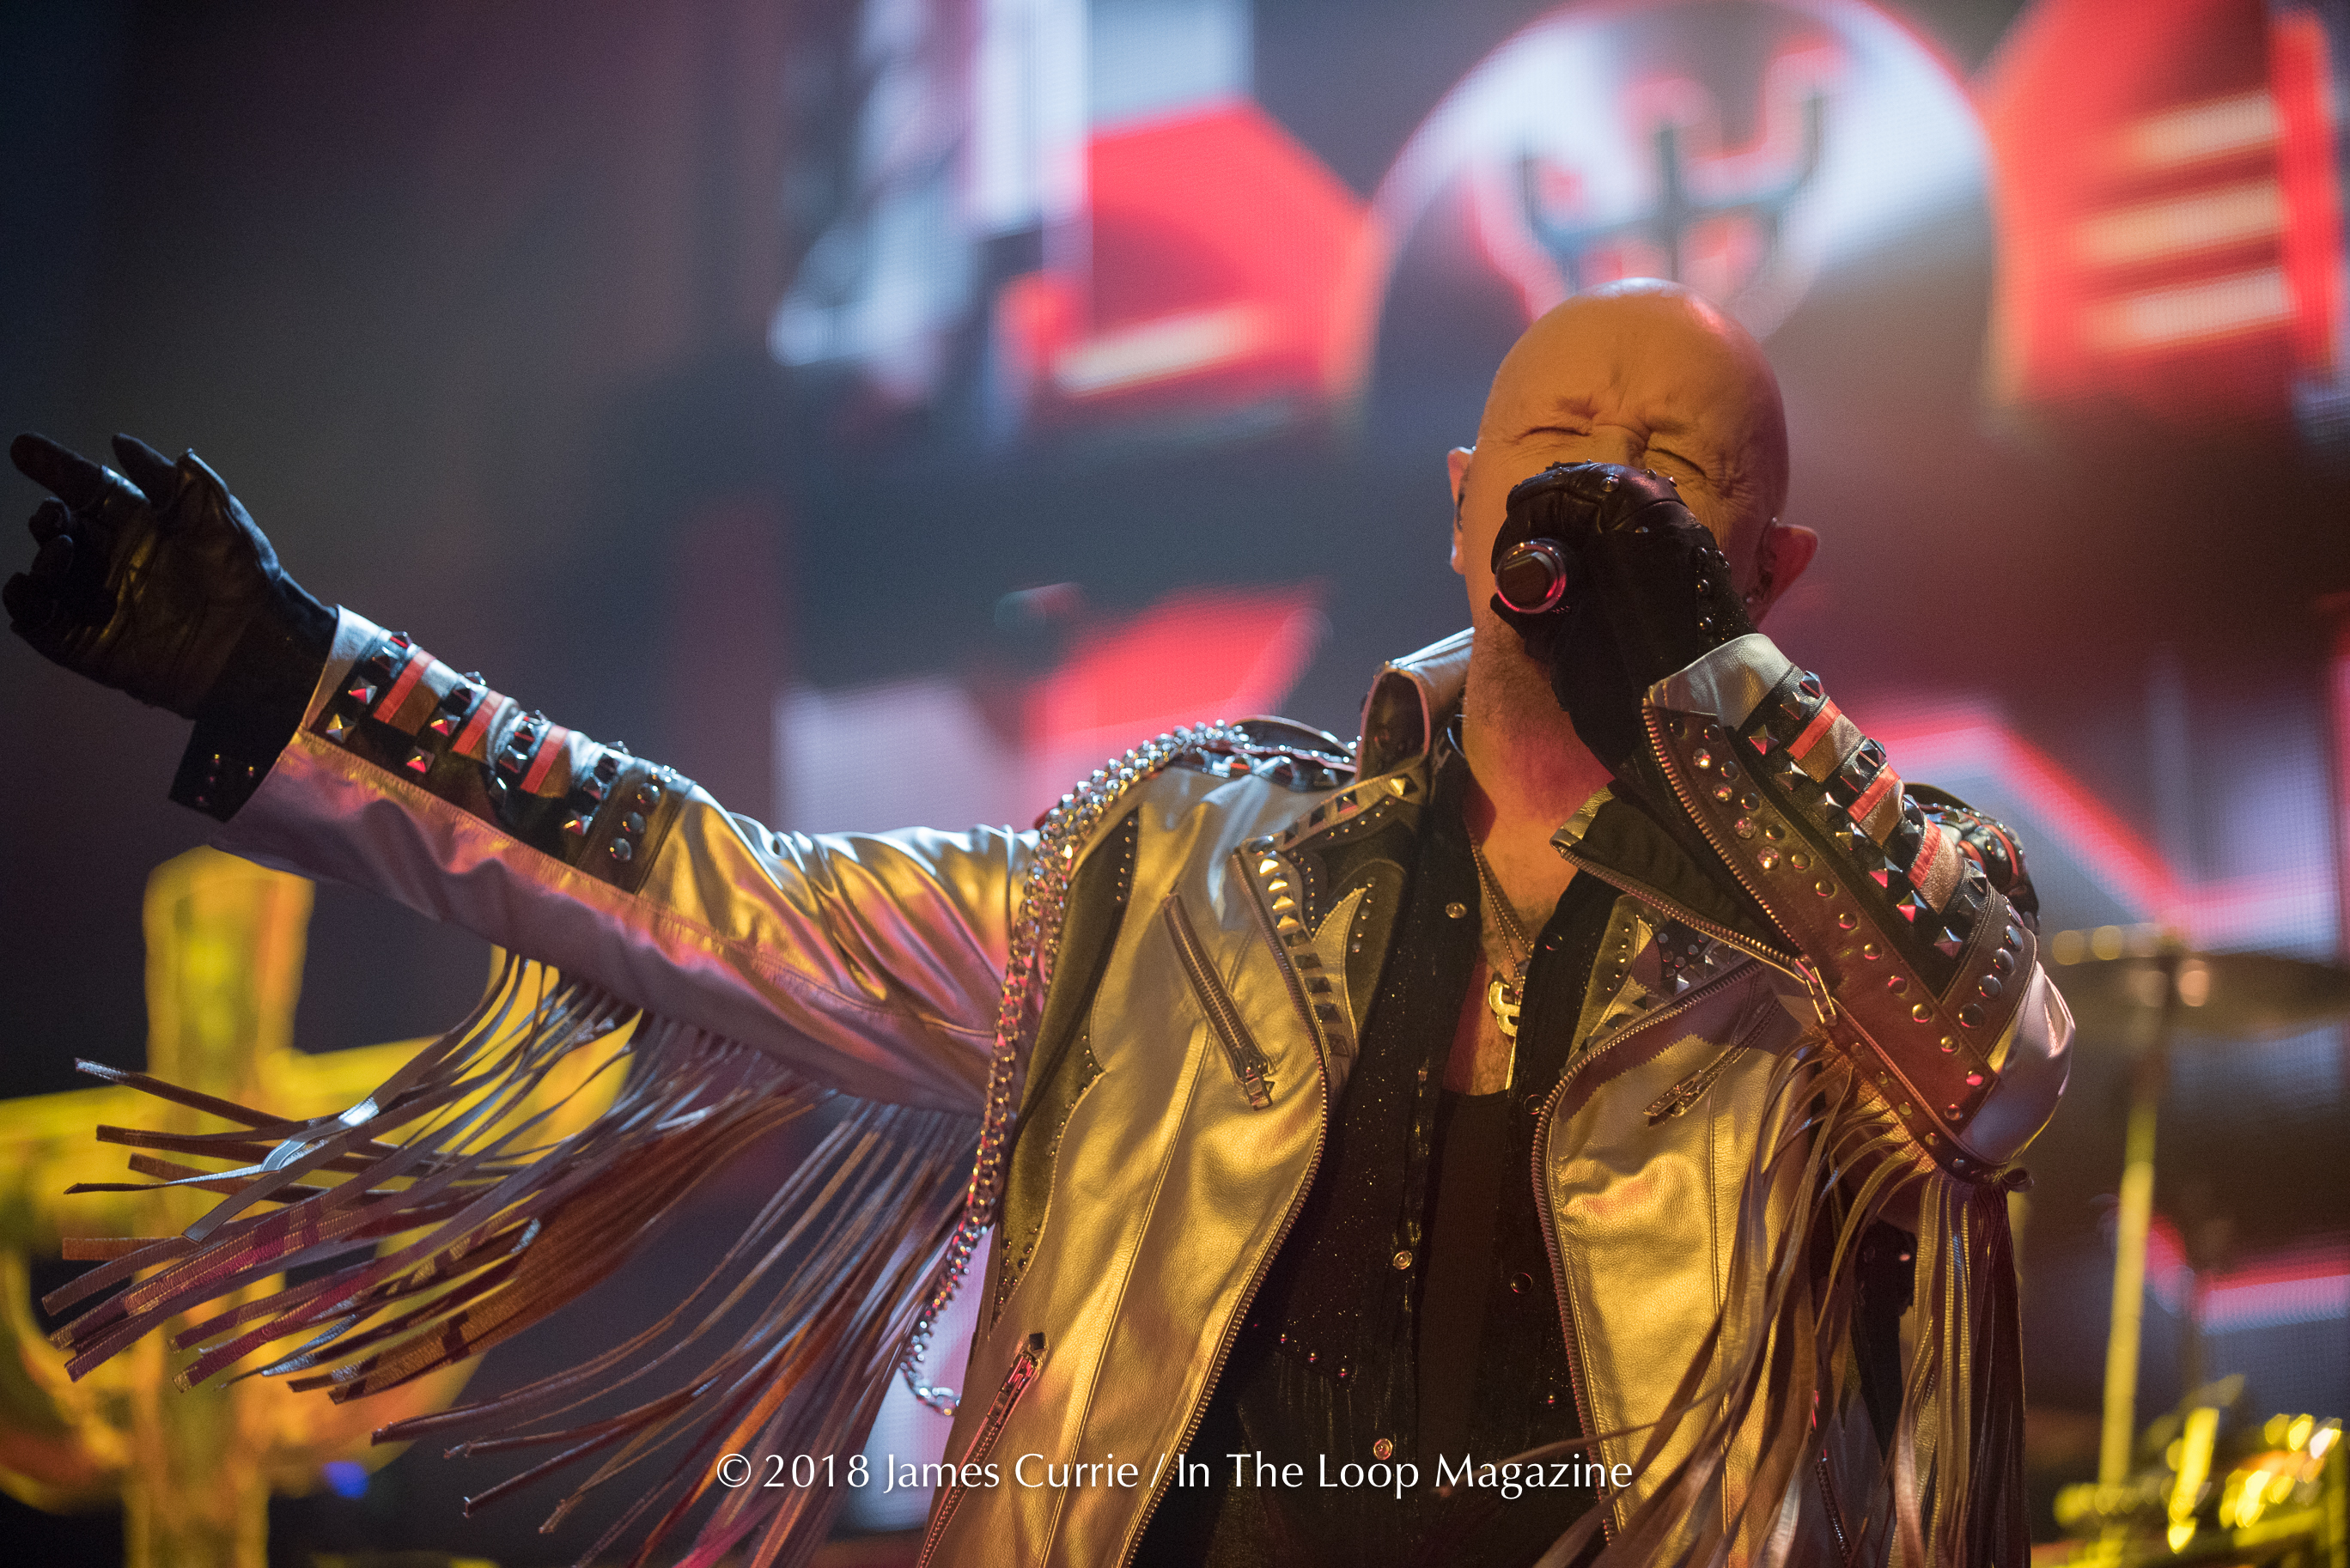 Judas Priest Brings “Firepower” To Chicagoland